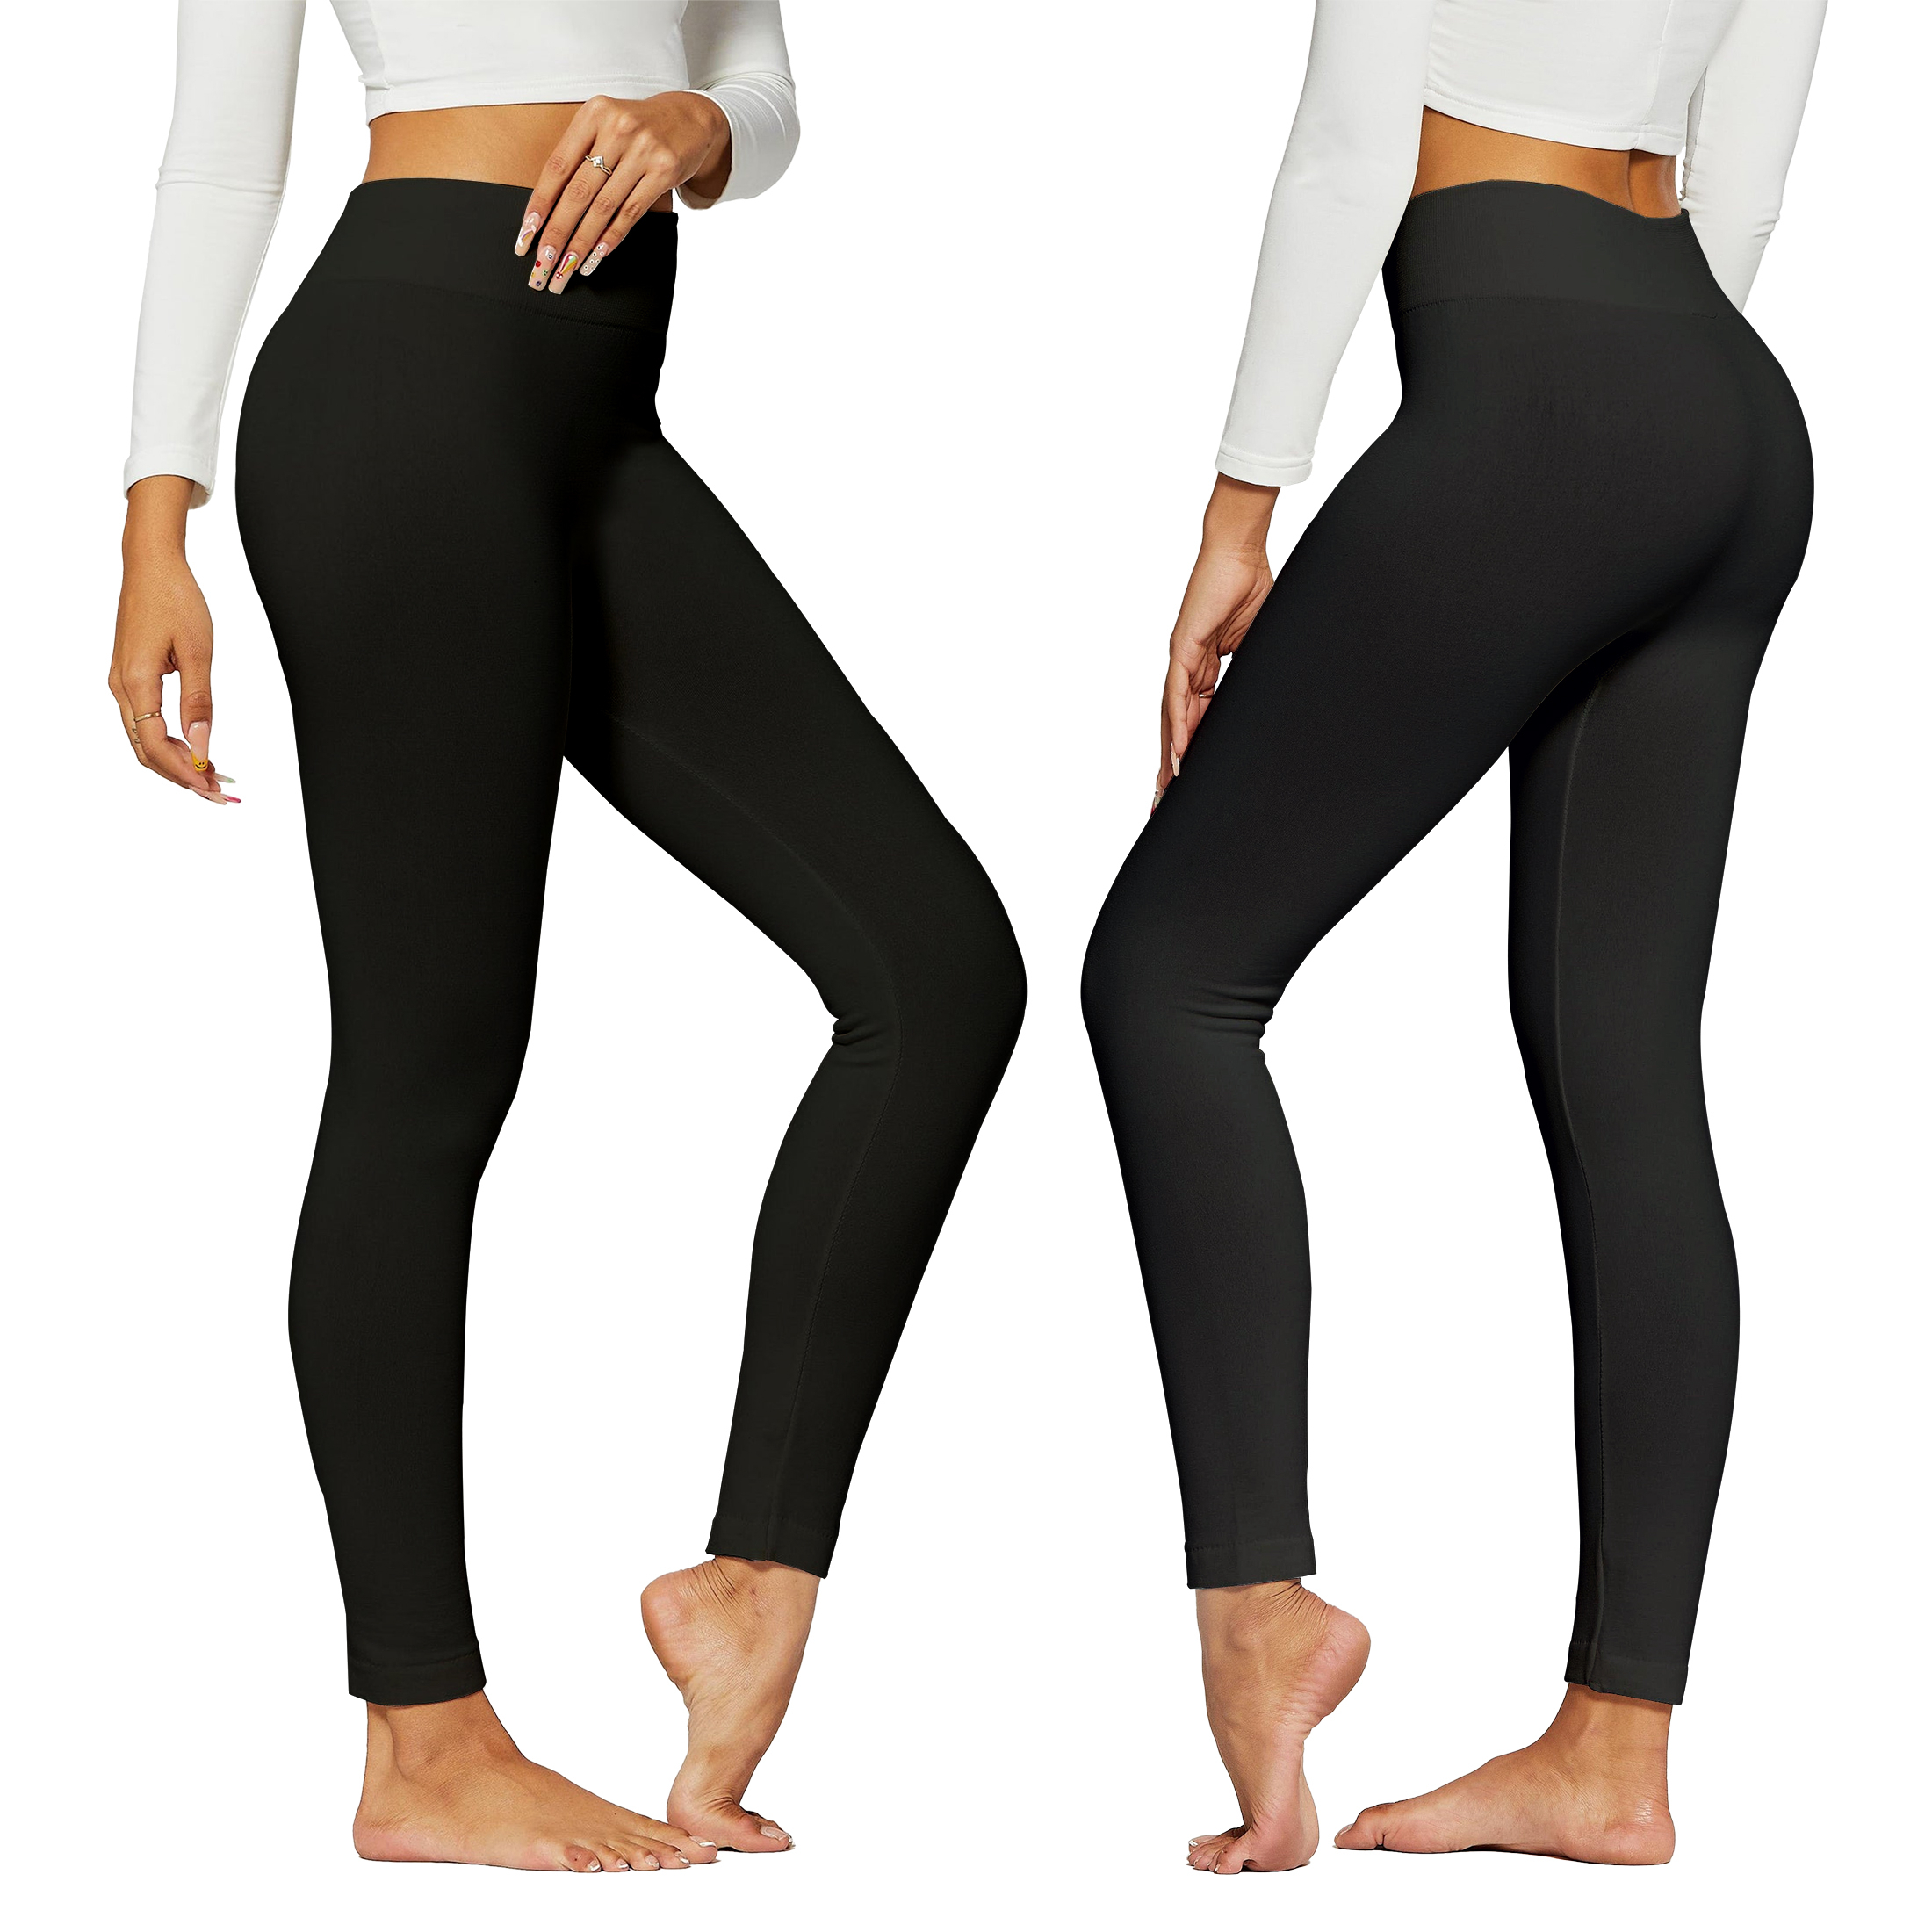 Women's Premium Quality High-Waist Fleece Lined Leggings (Plus Size Available) - Brown, 1X/2X